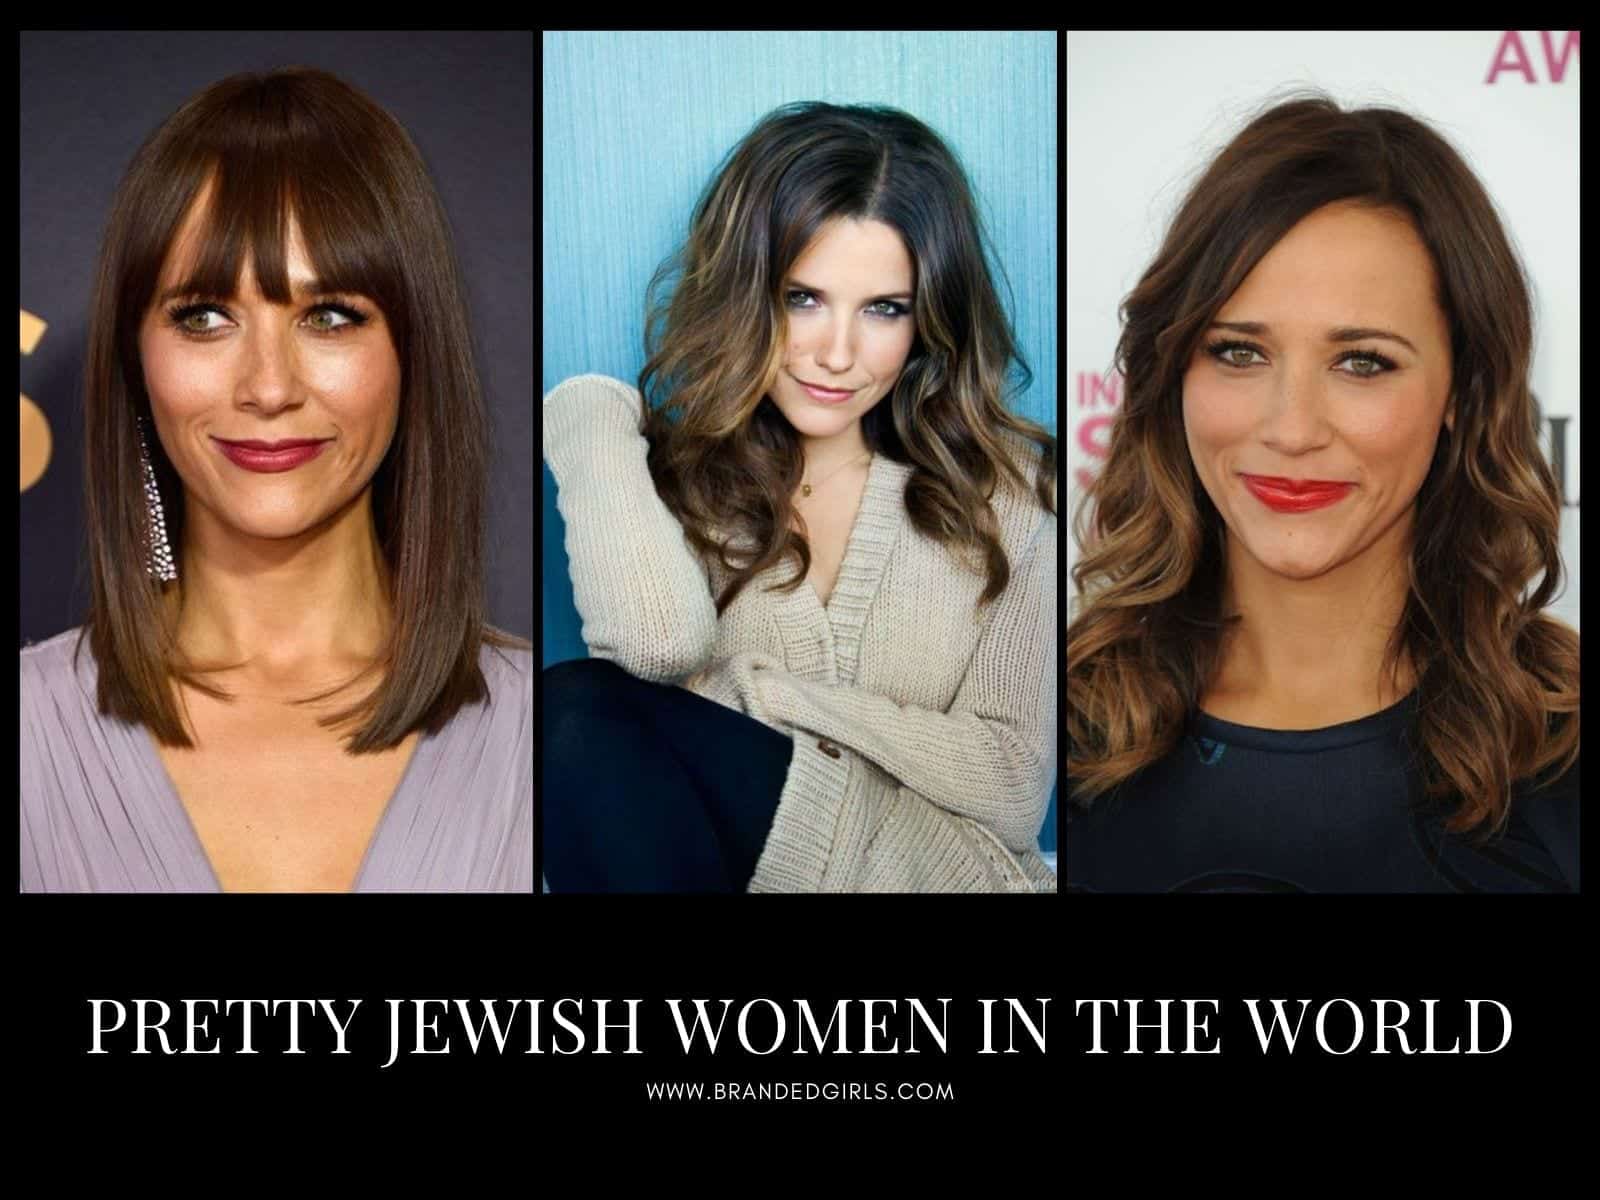 Jewish Women in the World